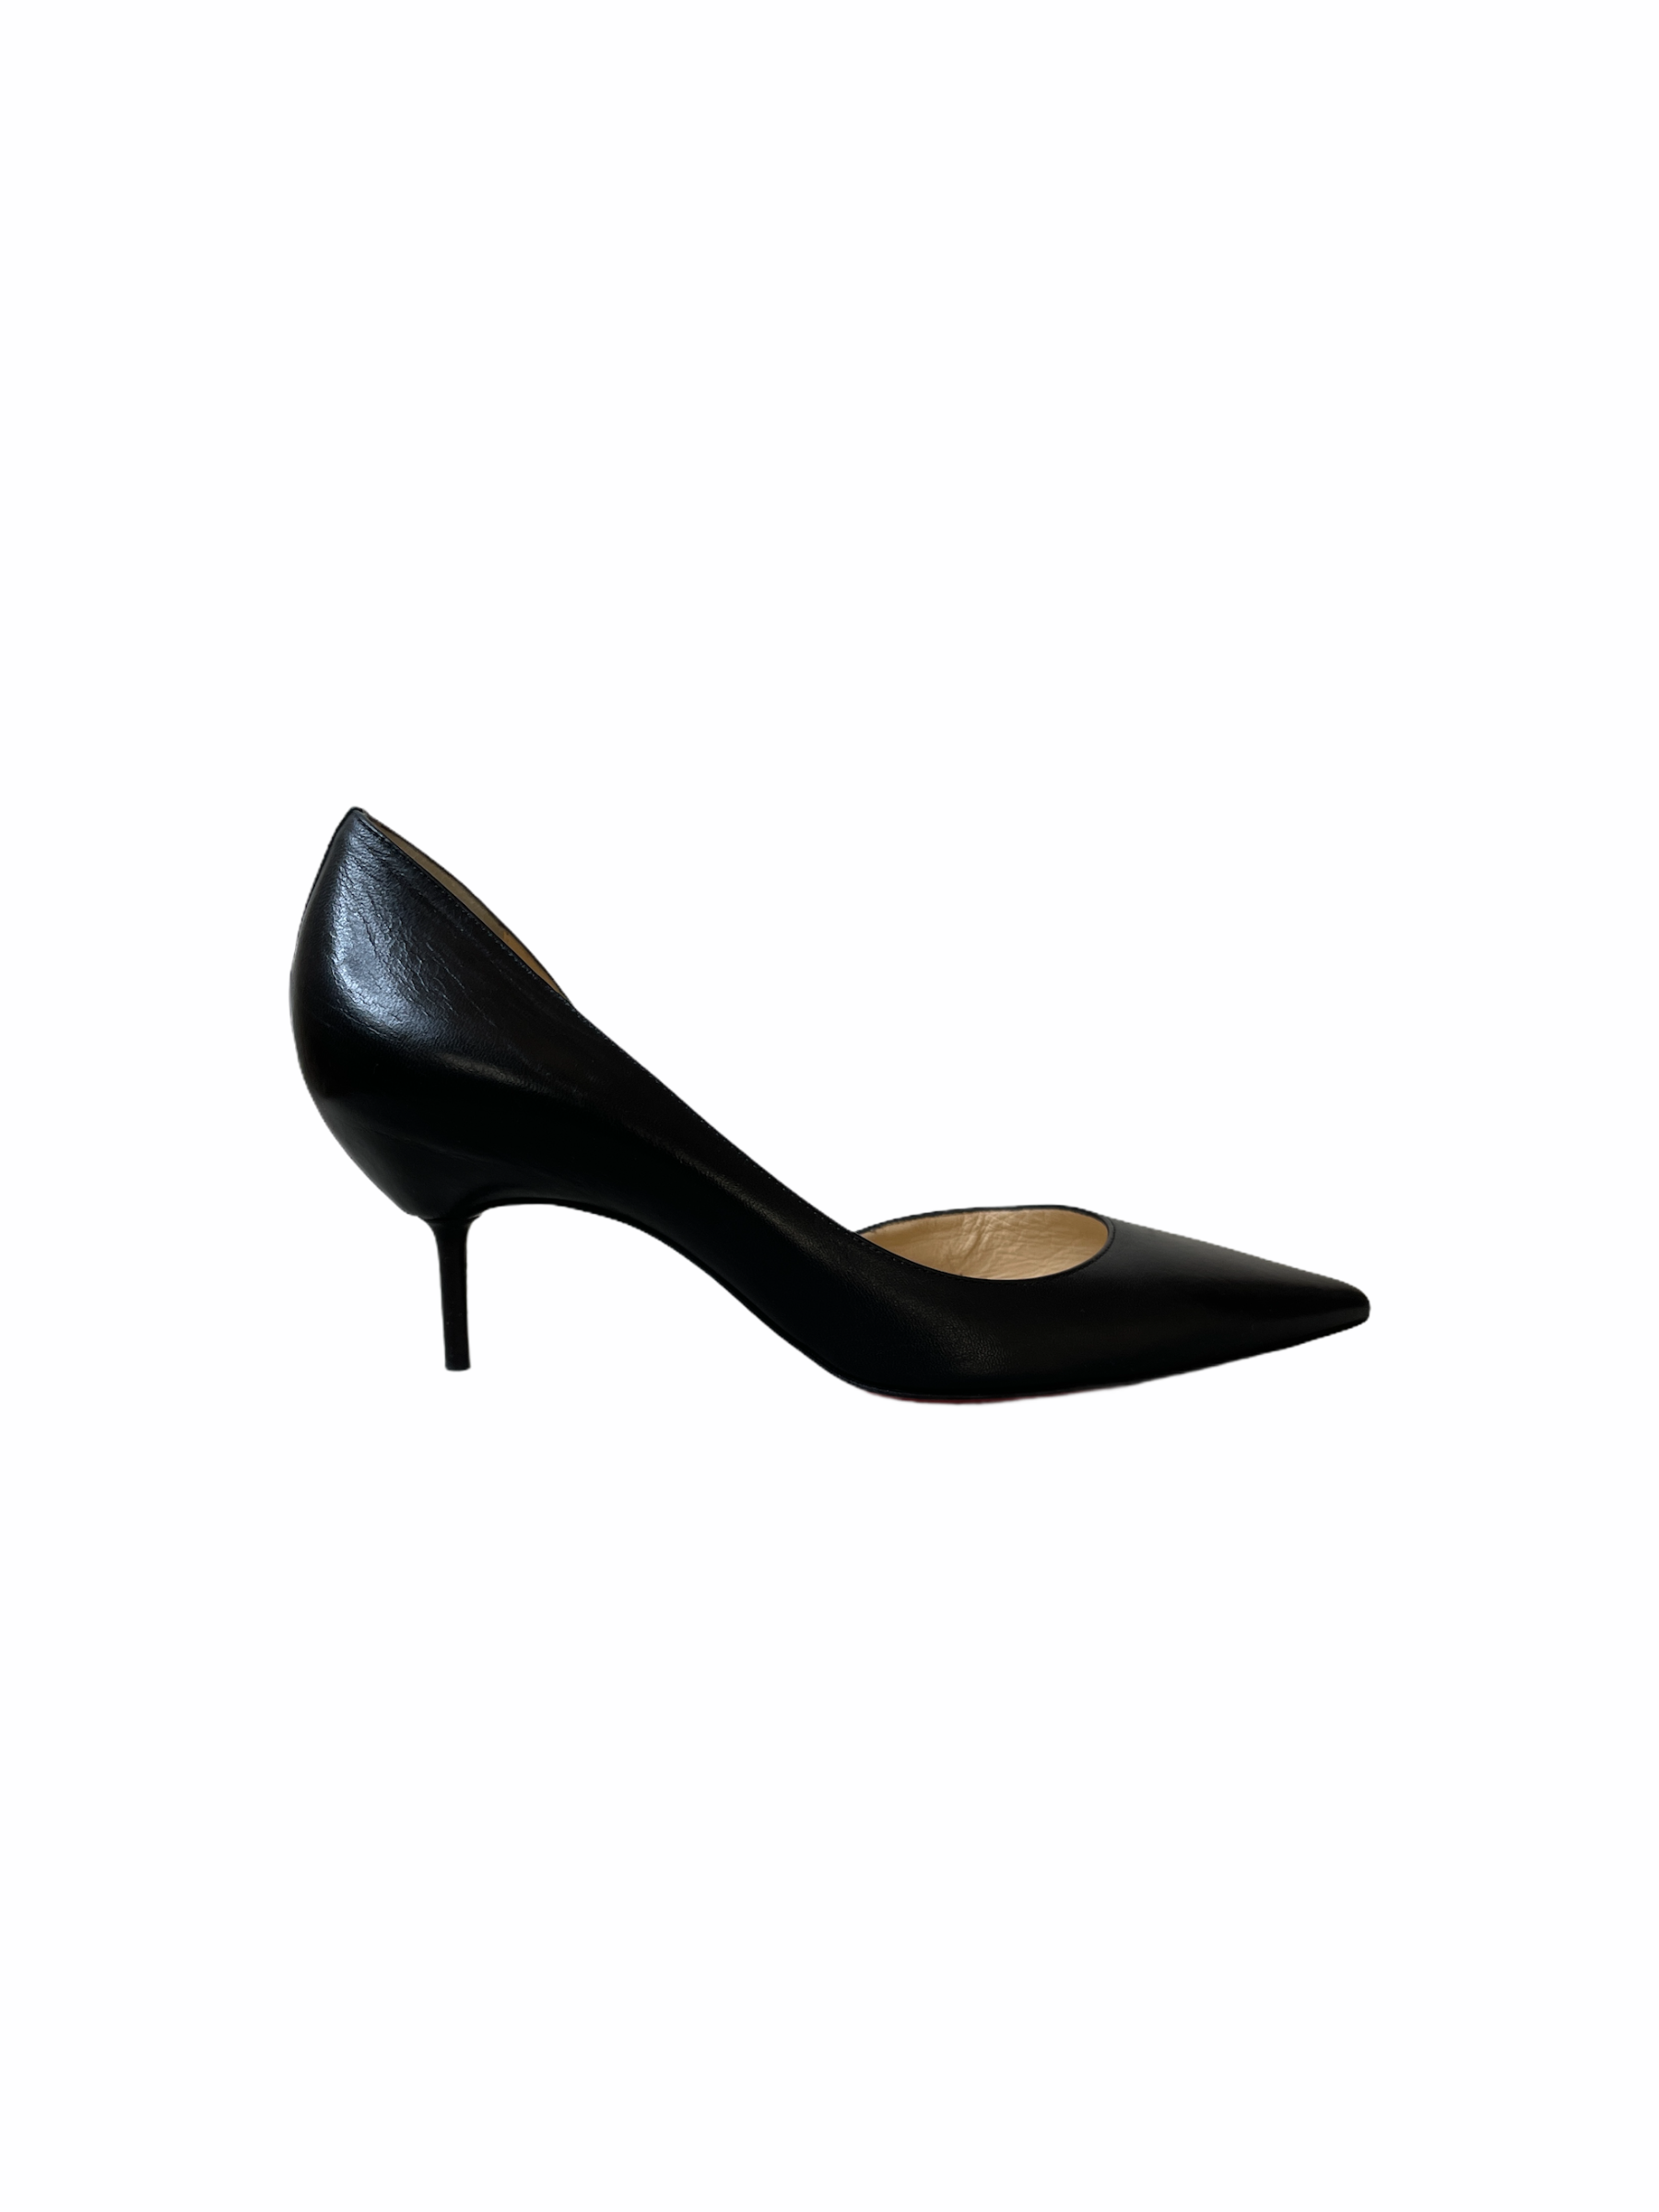 ARCHE size 38 US 7 Tinaka sandal small heel black and granite | Black heels,  Heels, Arche